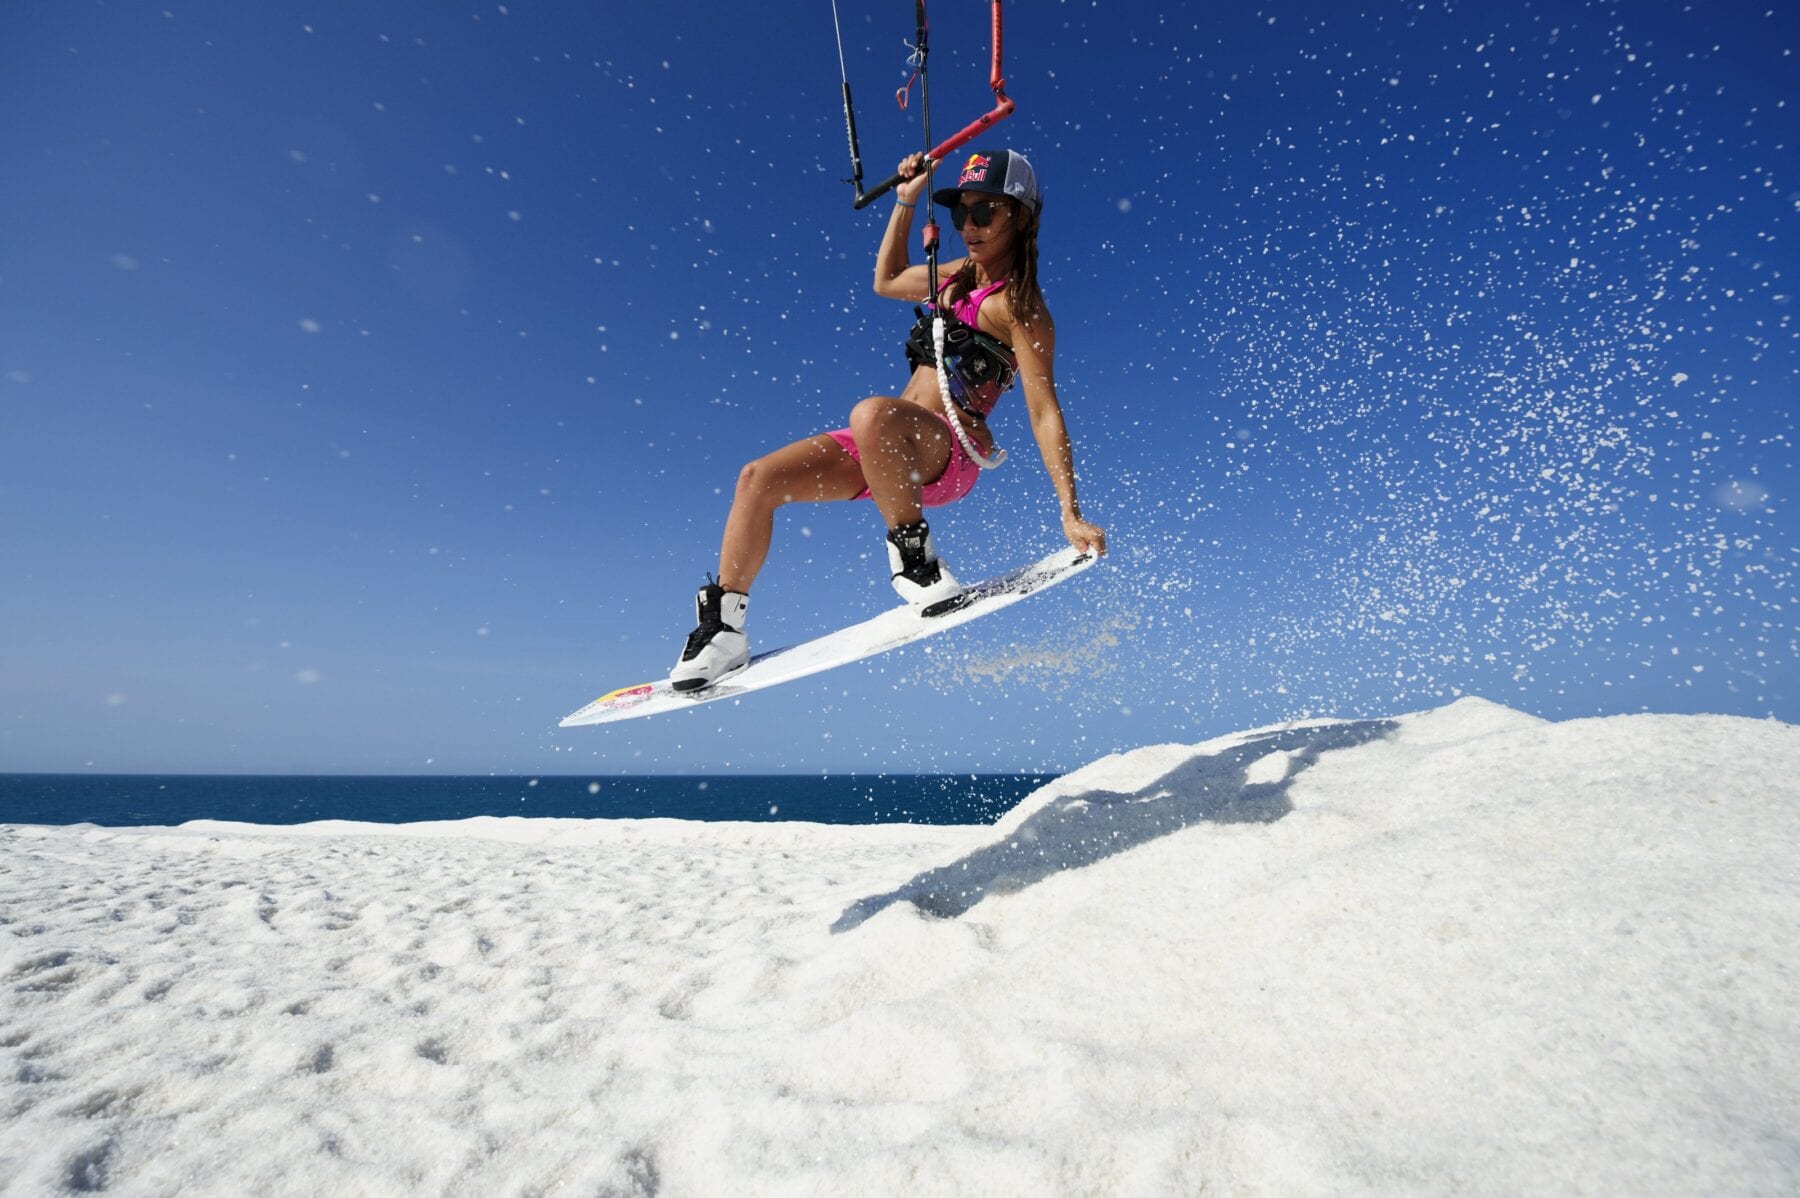 Kitesurfen op zout extreme sporten